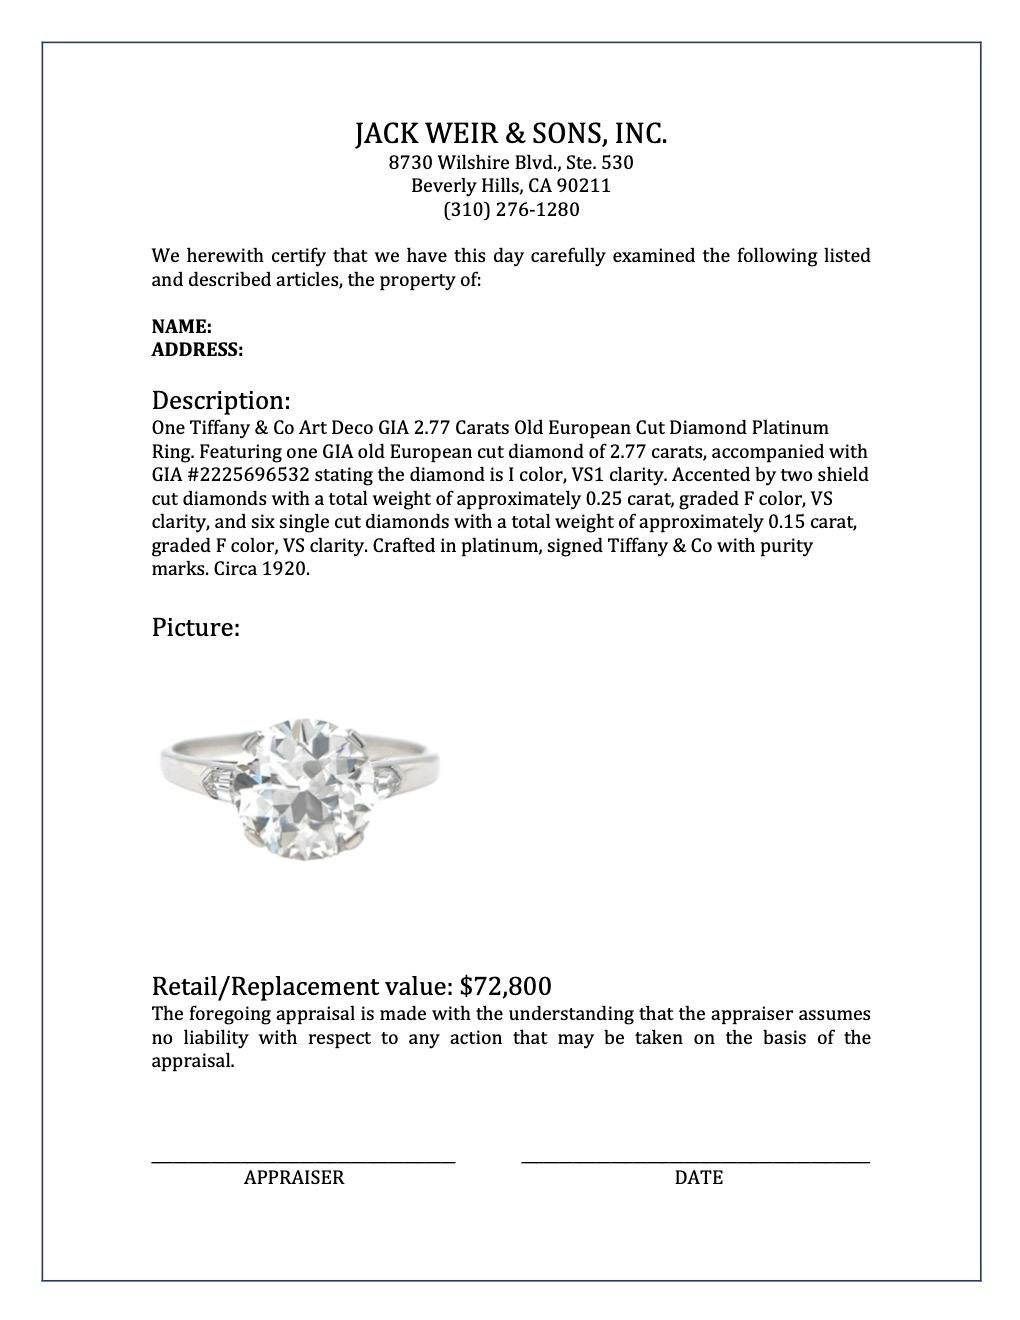 Tiffany & Co Art Deco GIA 2.77 Carats Old European Cut Diamond Platinum Ring 4